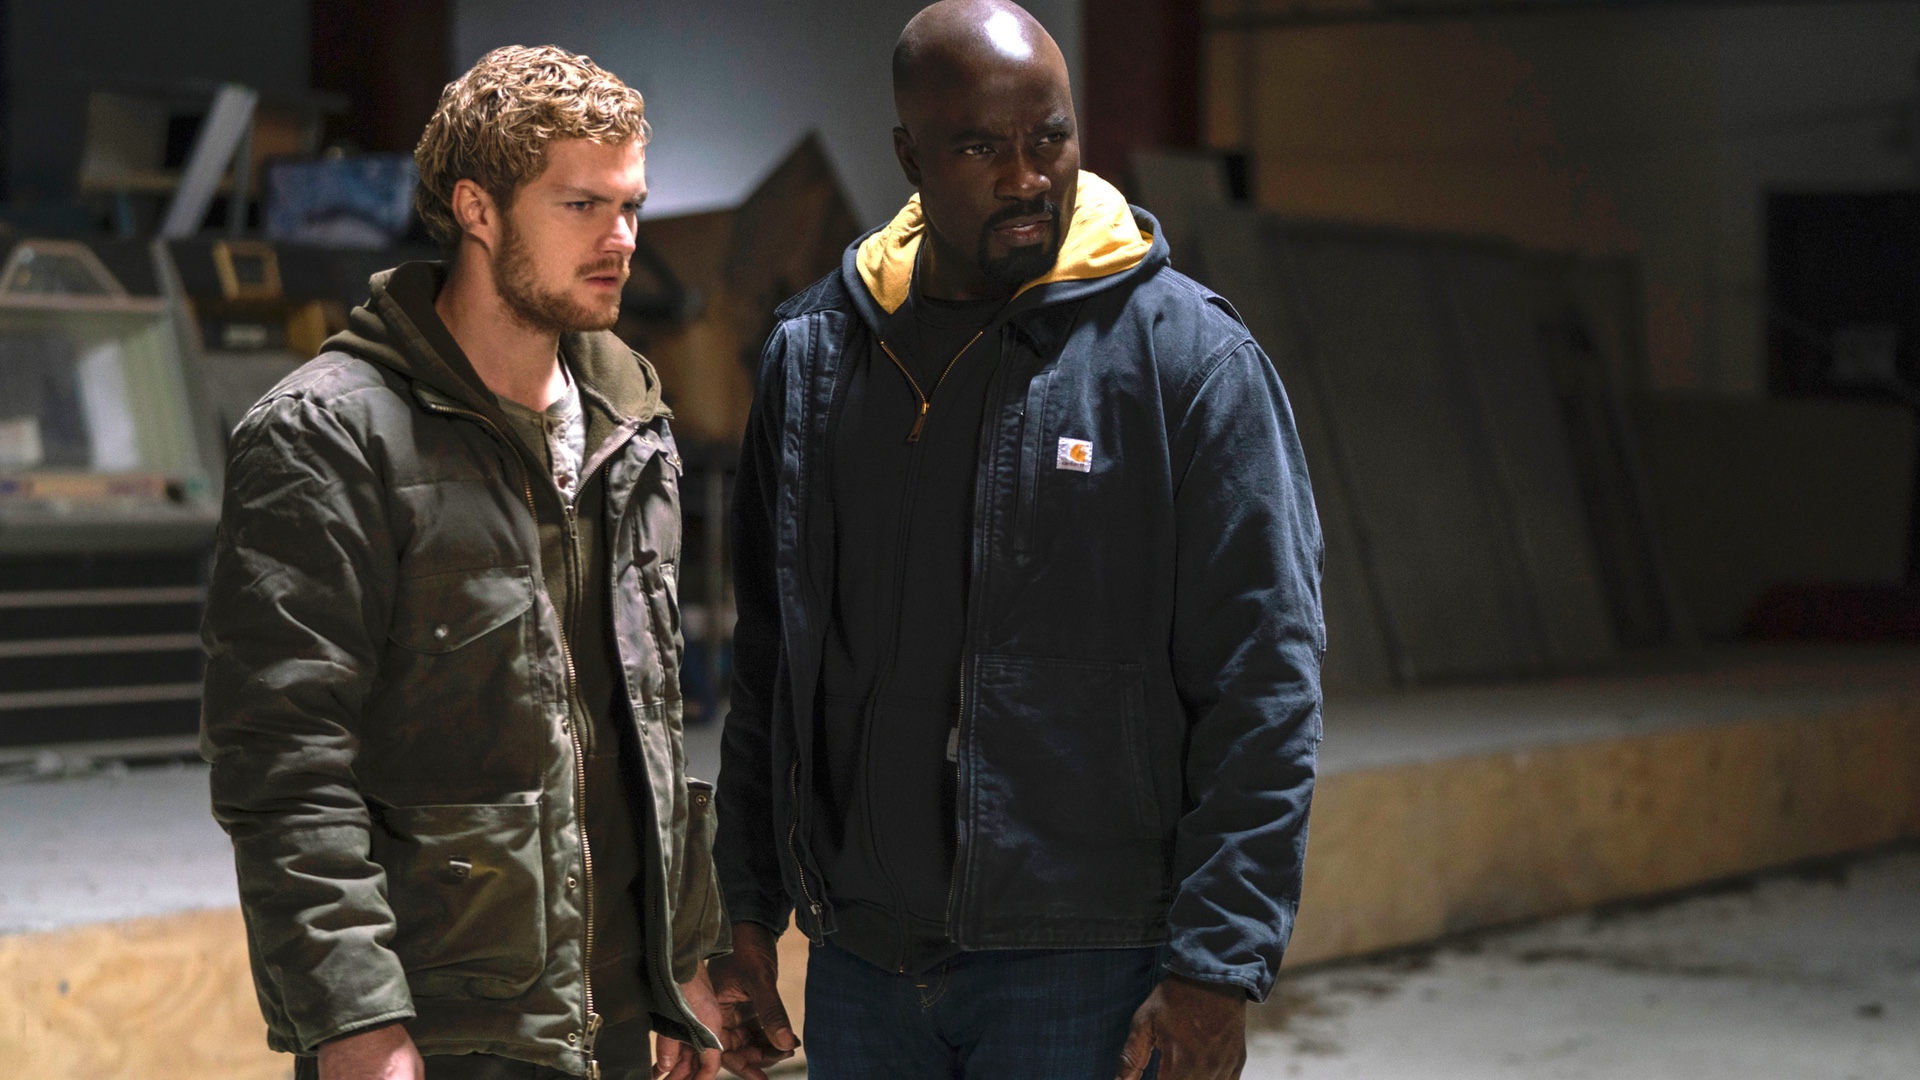 Iron Fist' Season 2 Review: Finally Good Enough to Watch on Netflix